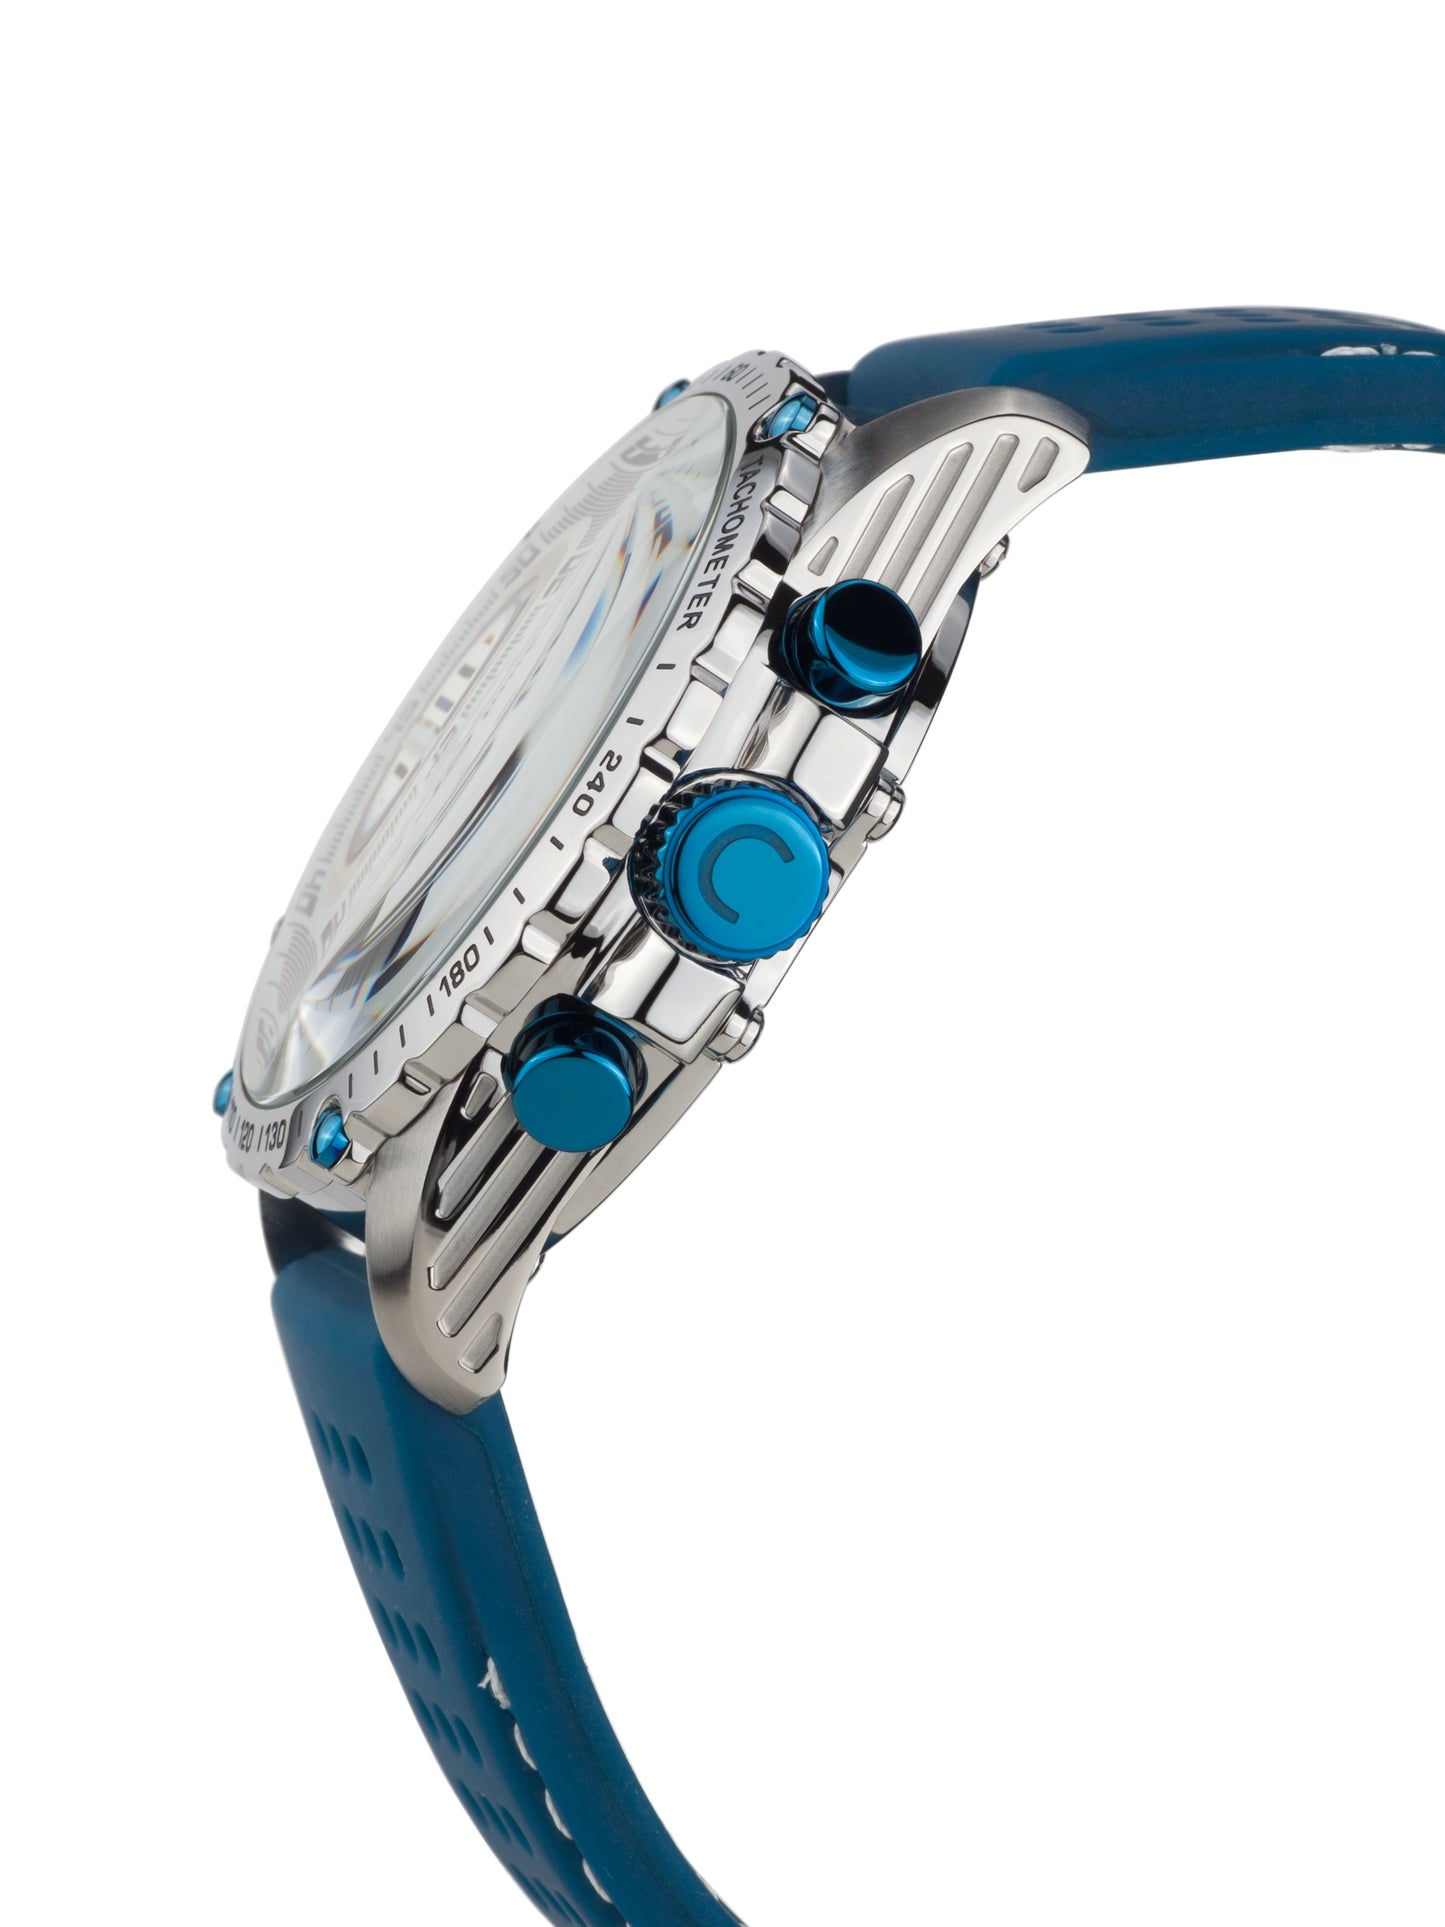 Automatic watches — Neelos — Chrono Diamond — steel silver blue